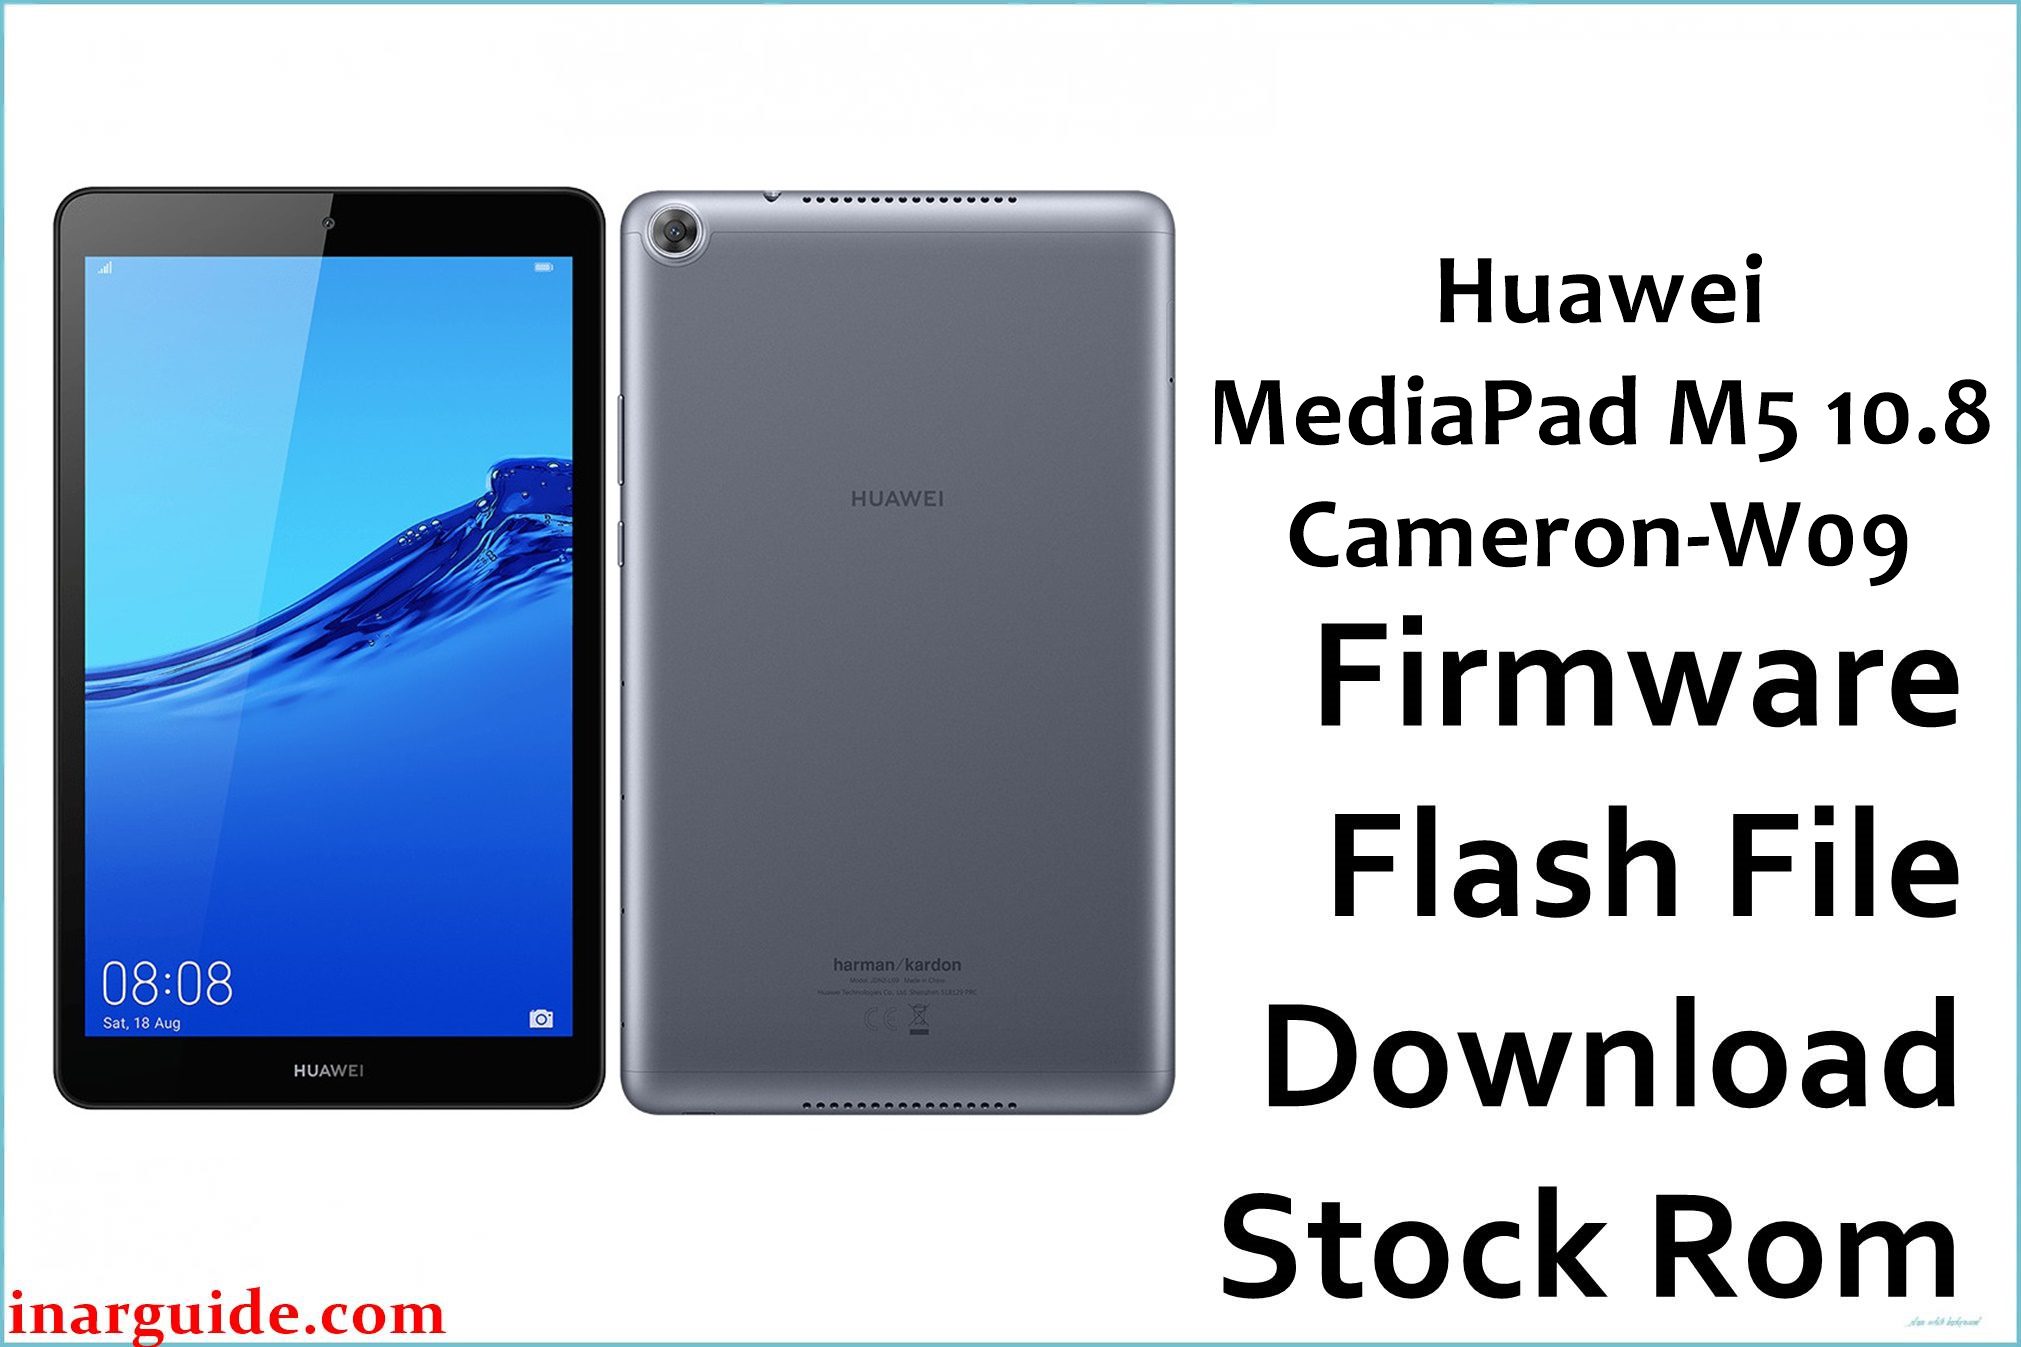 Huawei MediaPad M5 10.8 Cameron W09